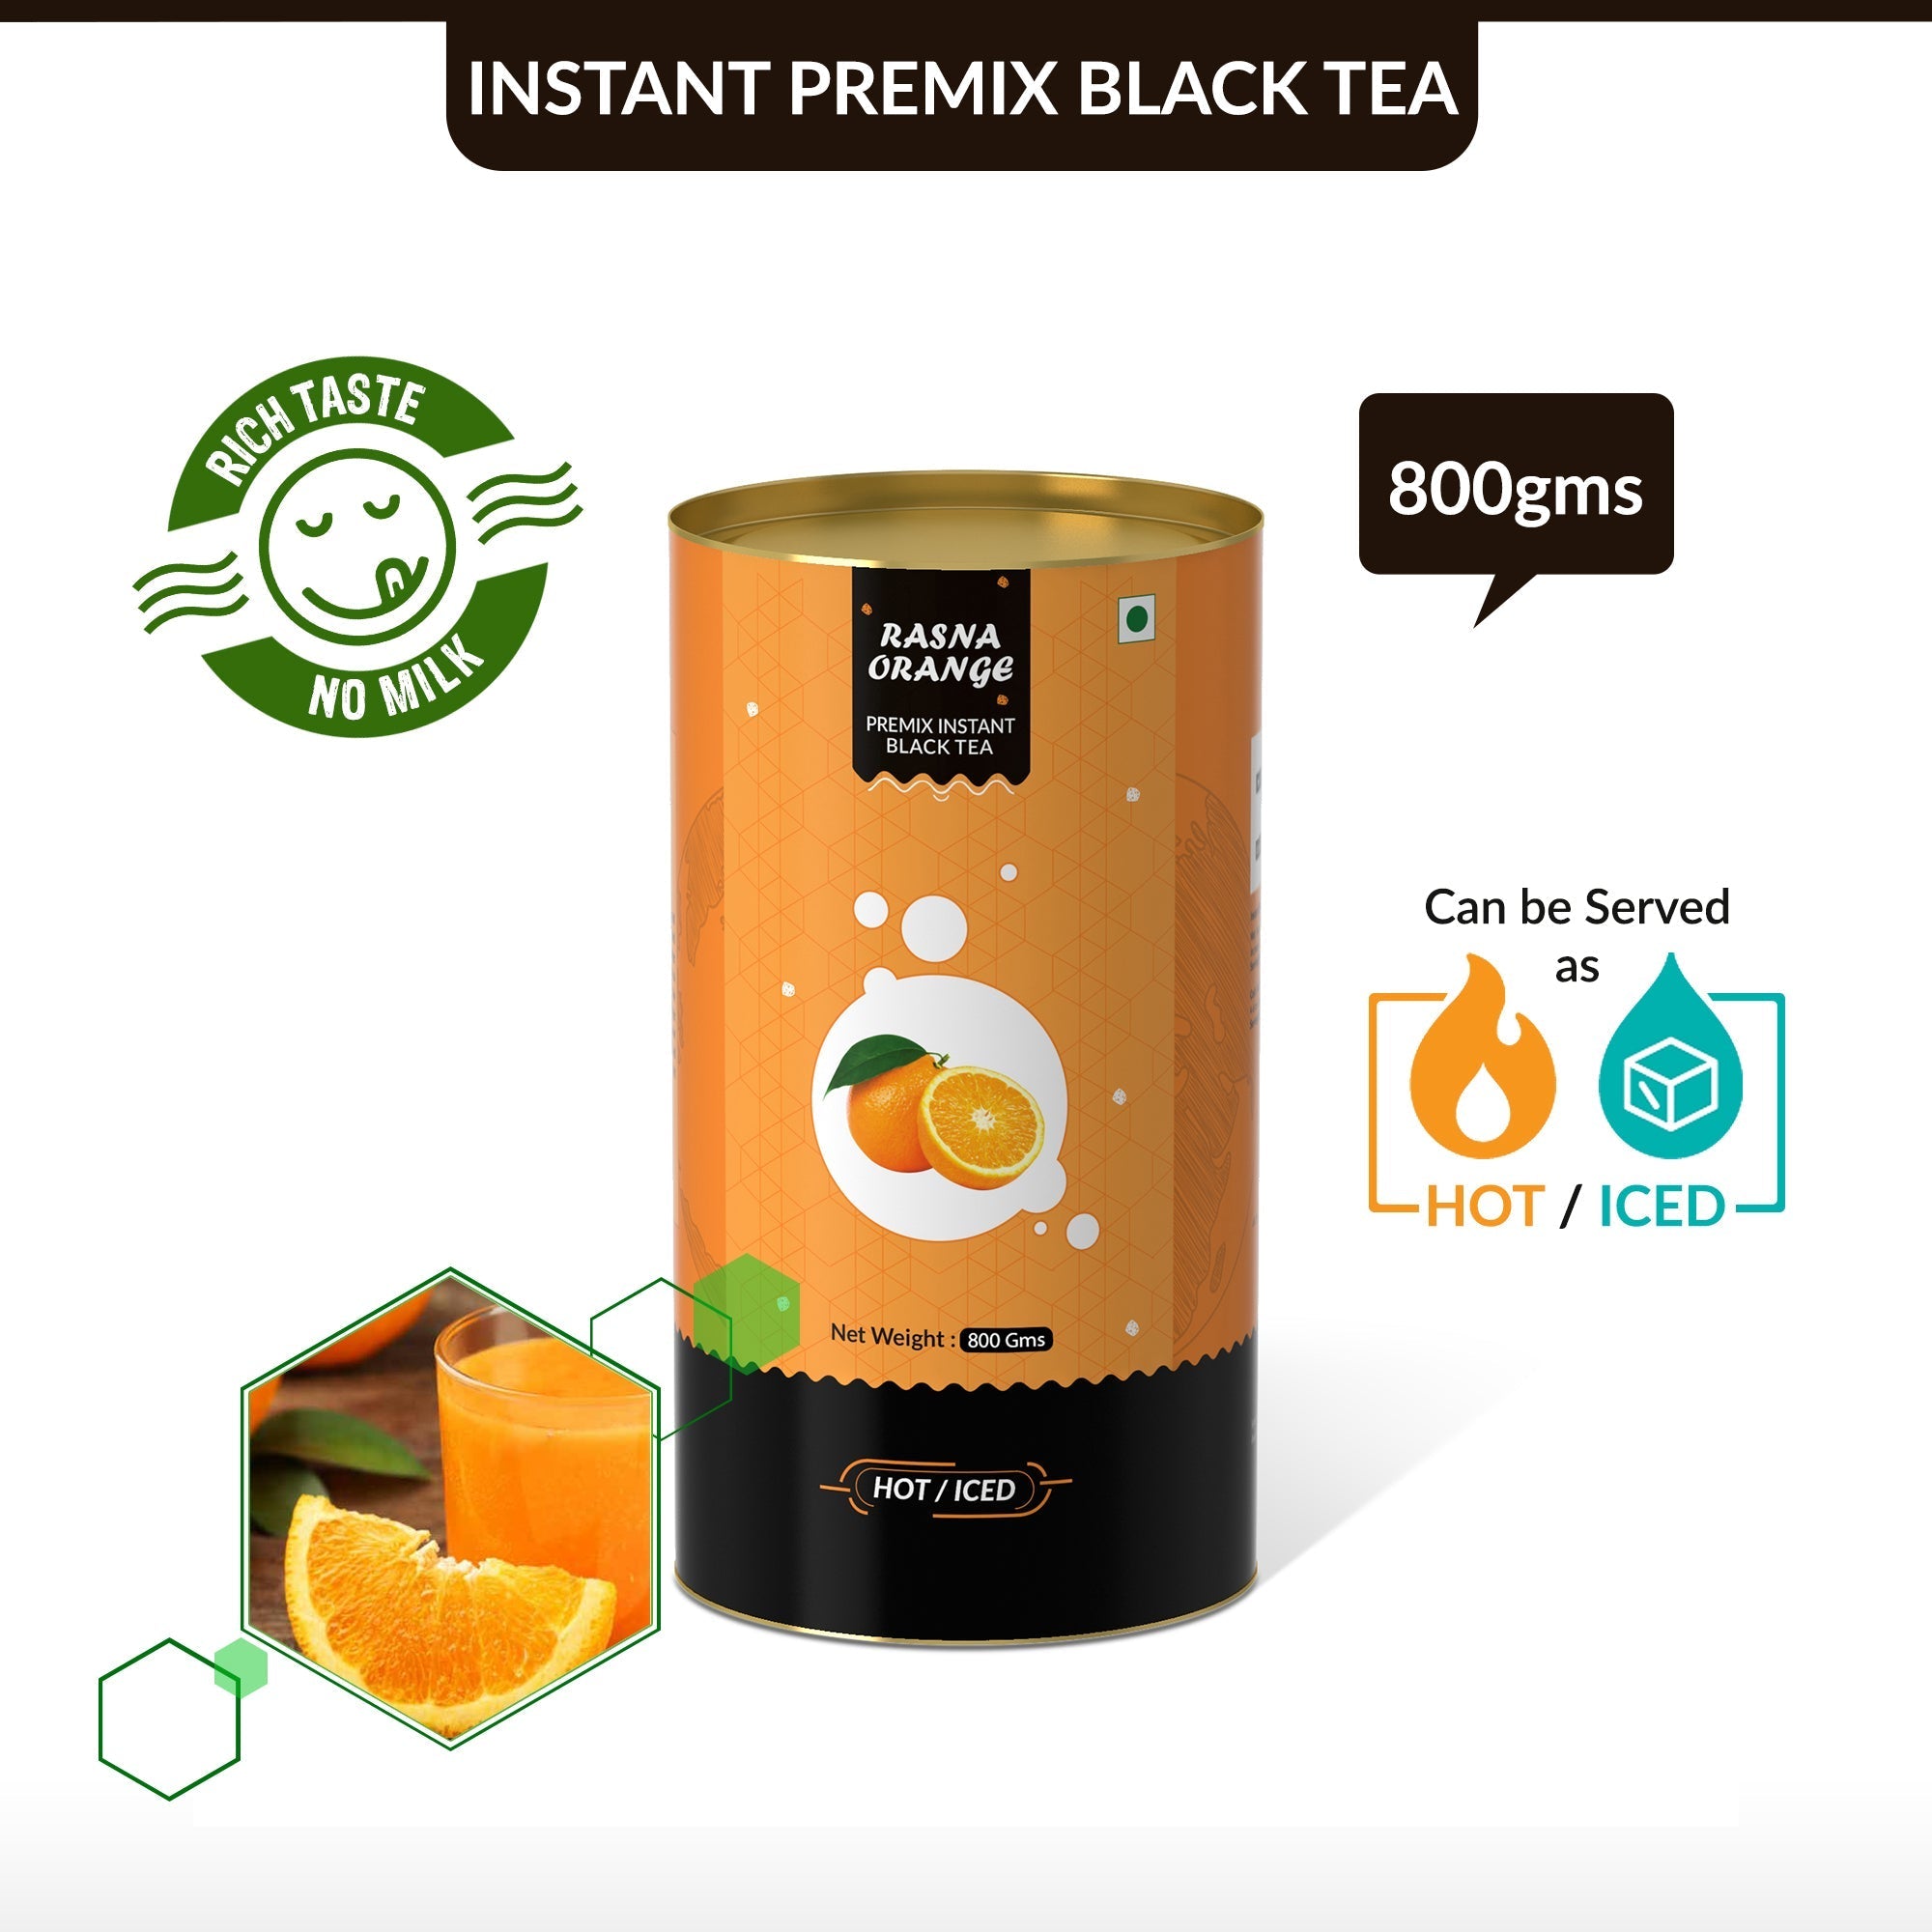 Rasna Orange Flavored Instant Black Tea - 800 gms